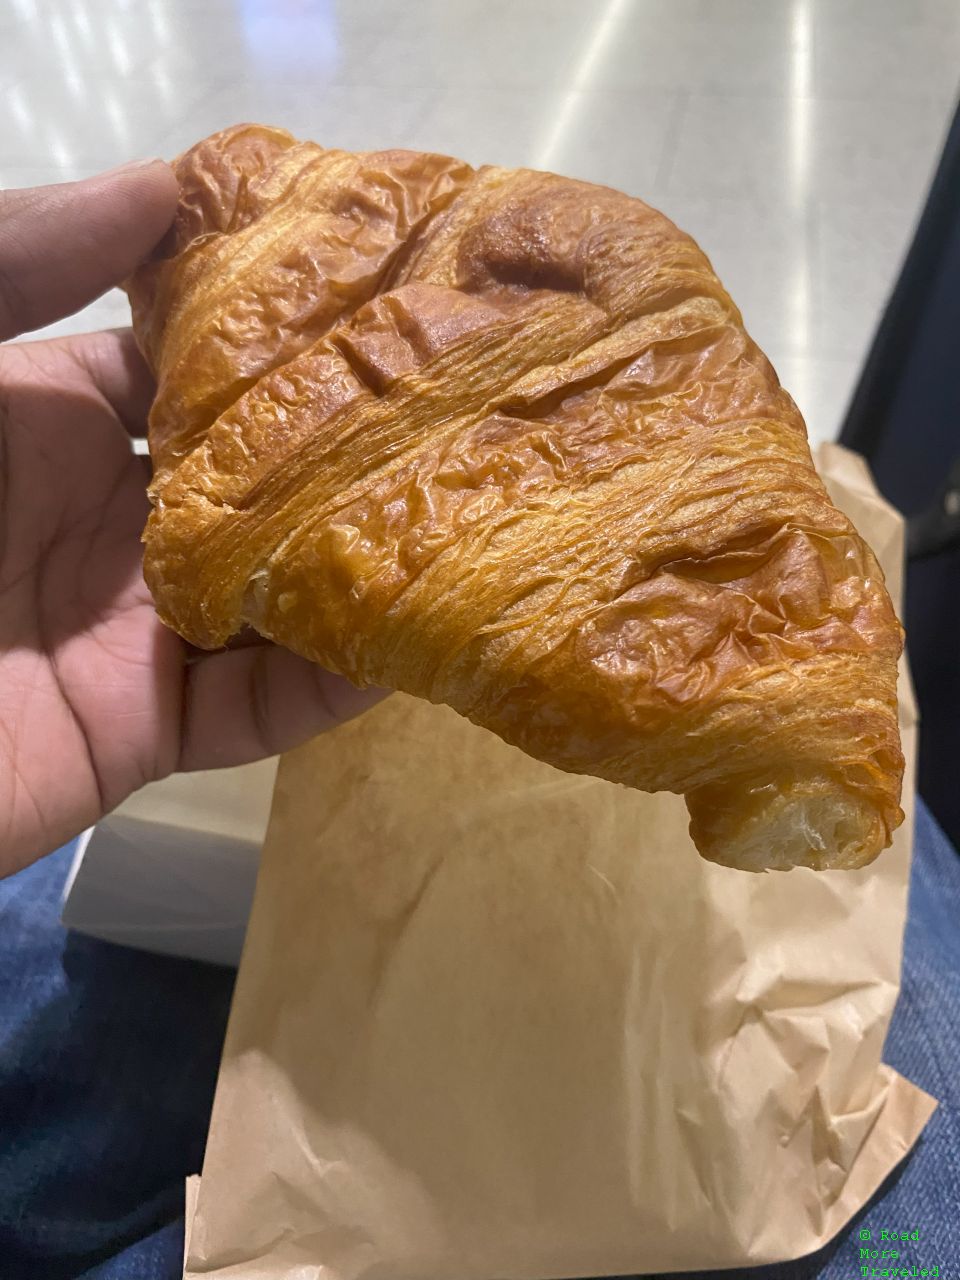 jetBlue Mint to-go breakfast bag - croissant